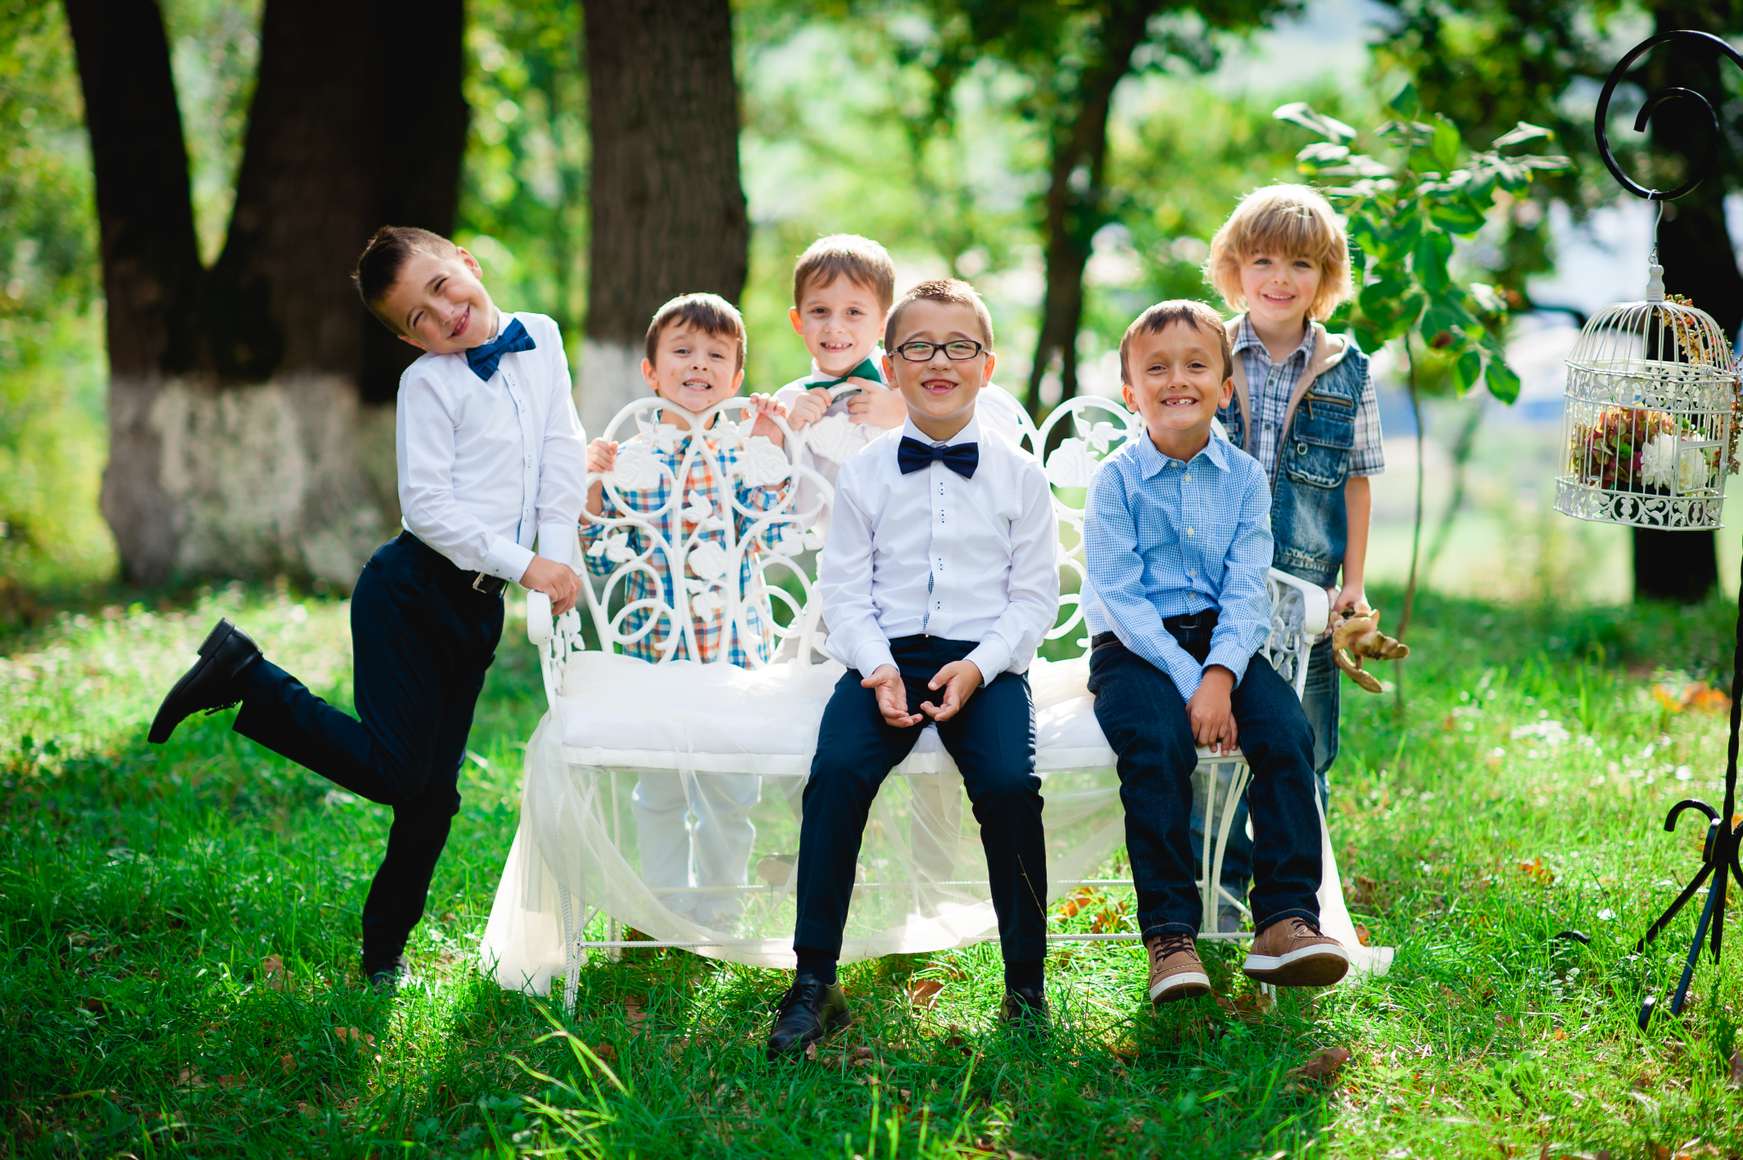 Outdoor kids at wedding